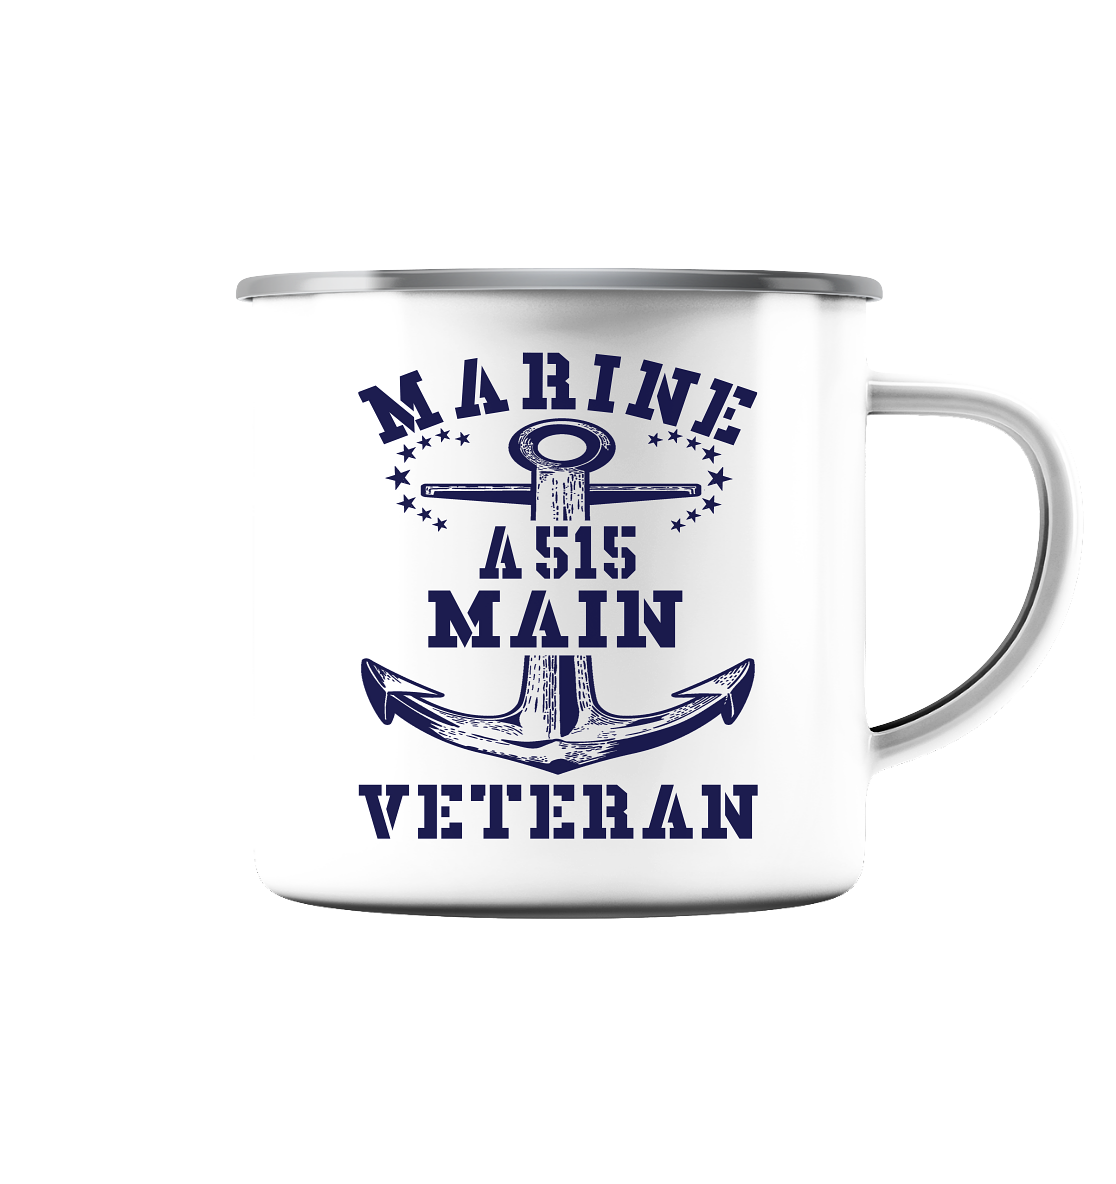 Tender A515 MAIN Marine Veteran  - Emaille Tasse (Silber)